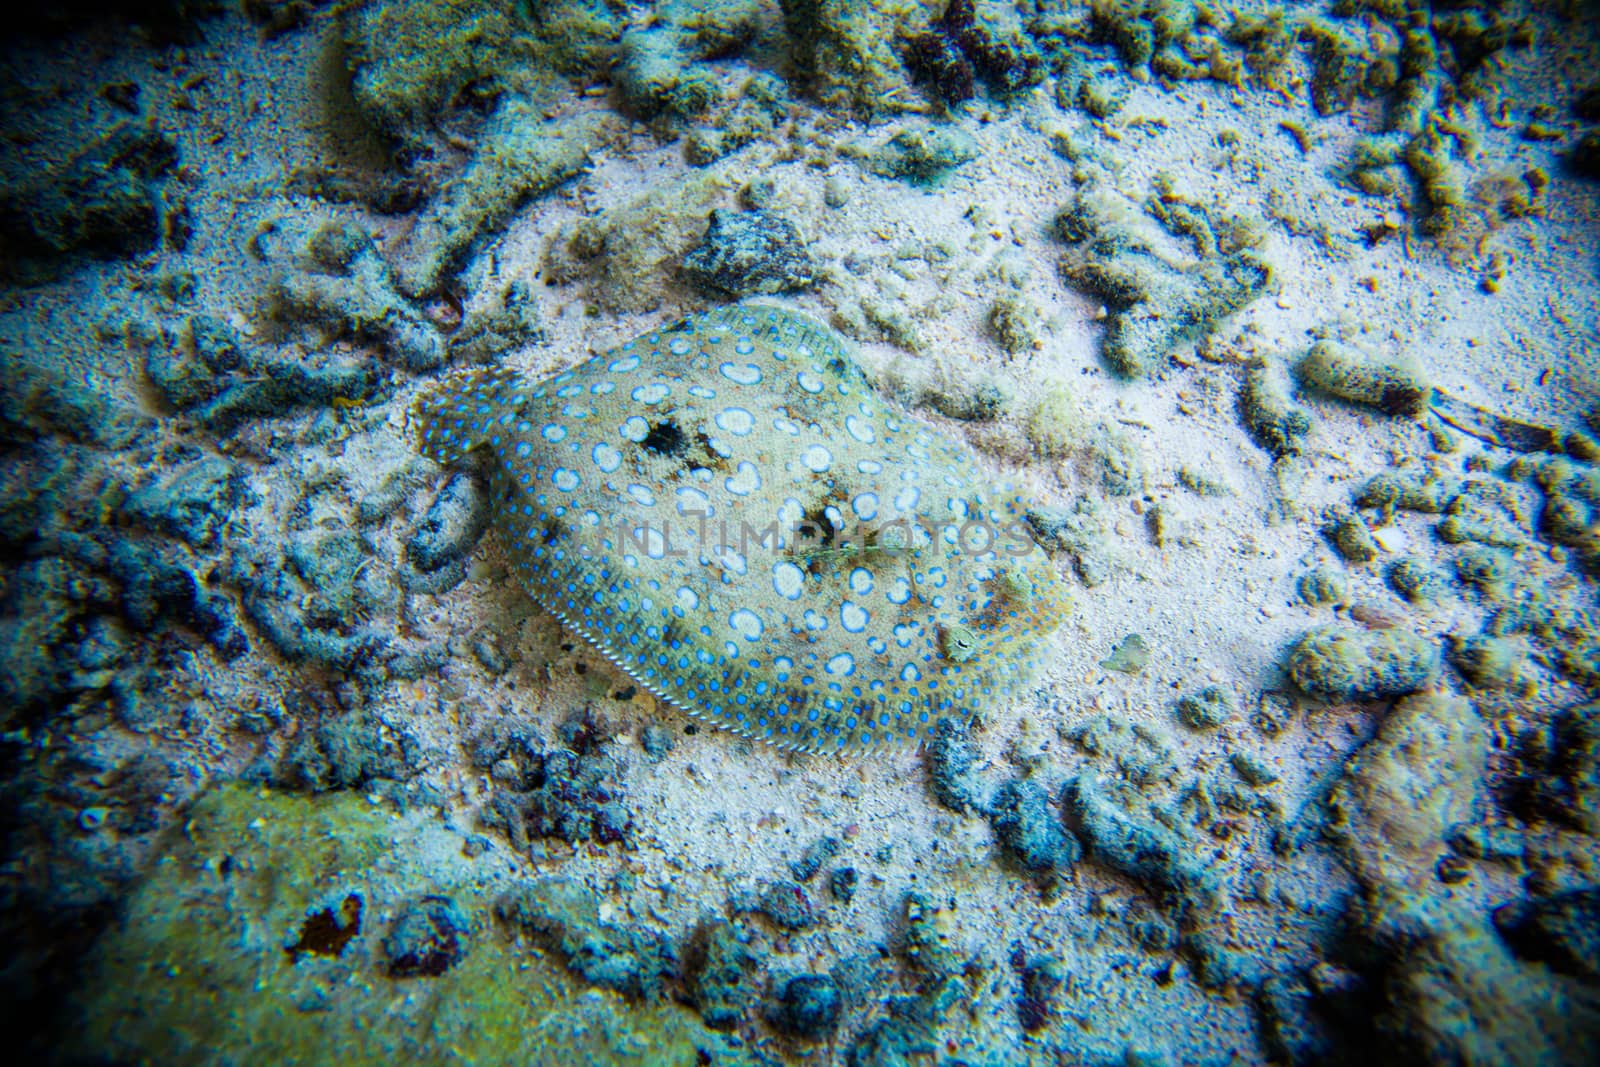 Bothus Lunatus of Flat Fish Hiding in the Bottom of the Sea